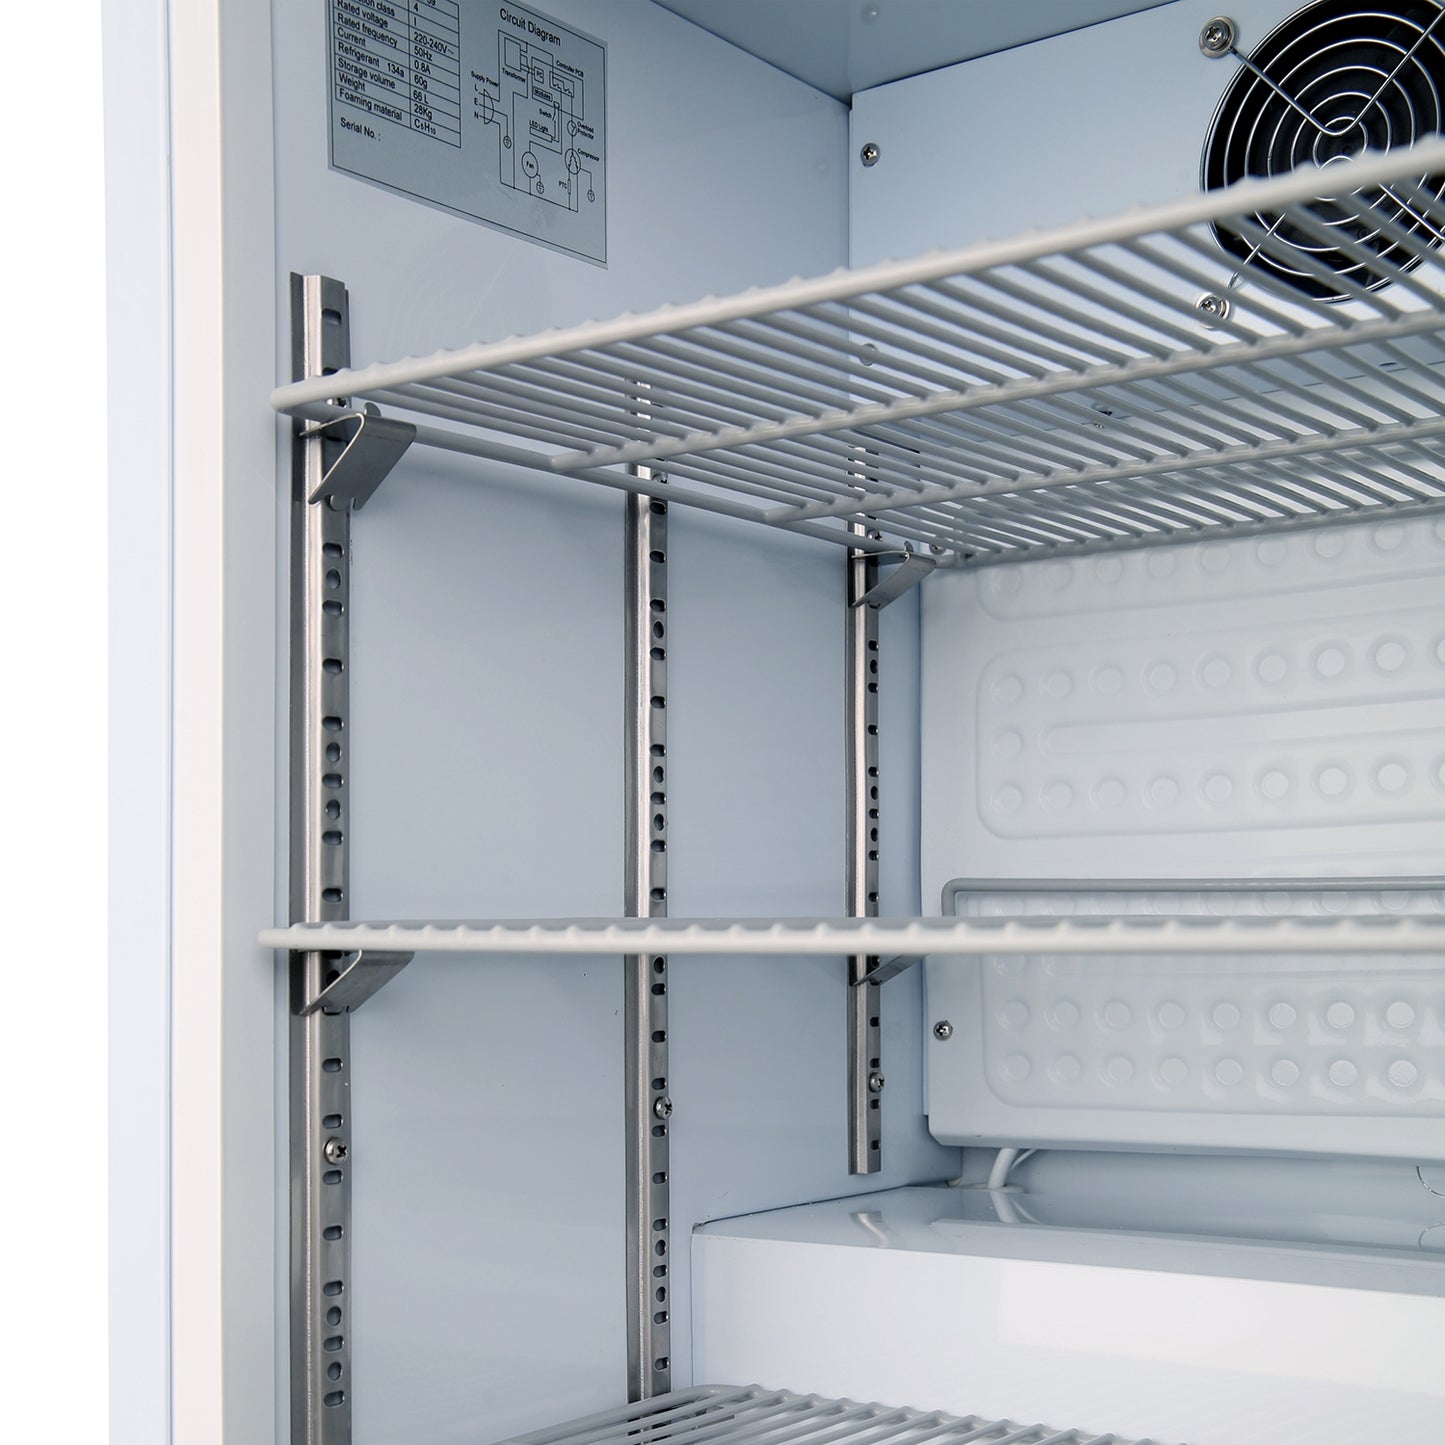 CoolMed Solid Door Refrigerator - 400 Litres - CMS400